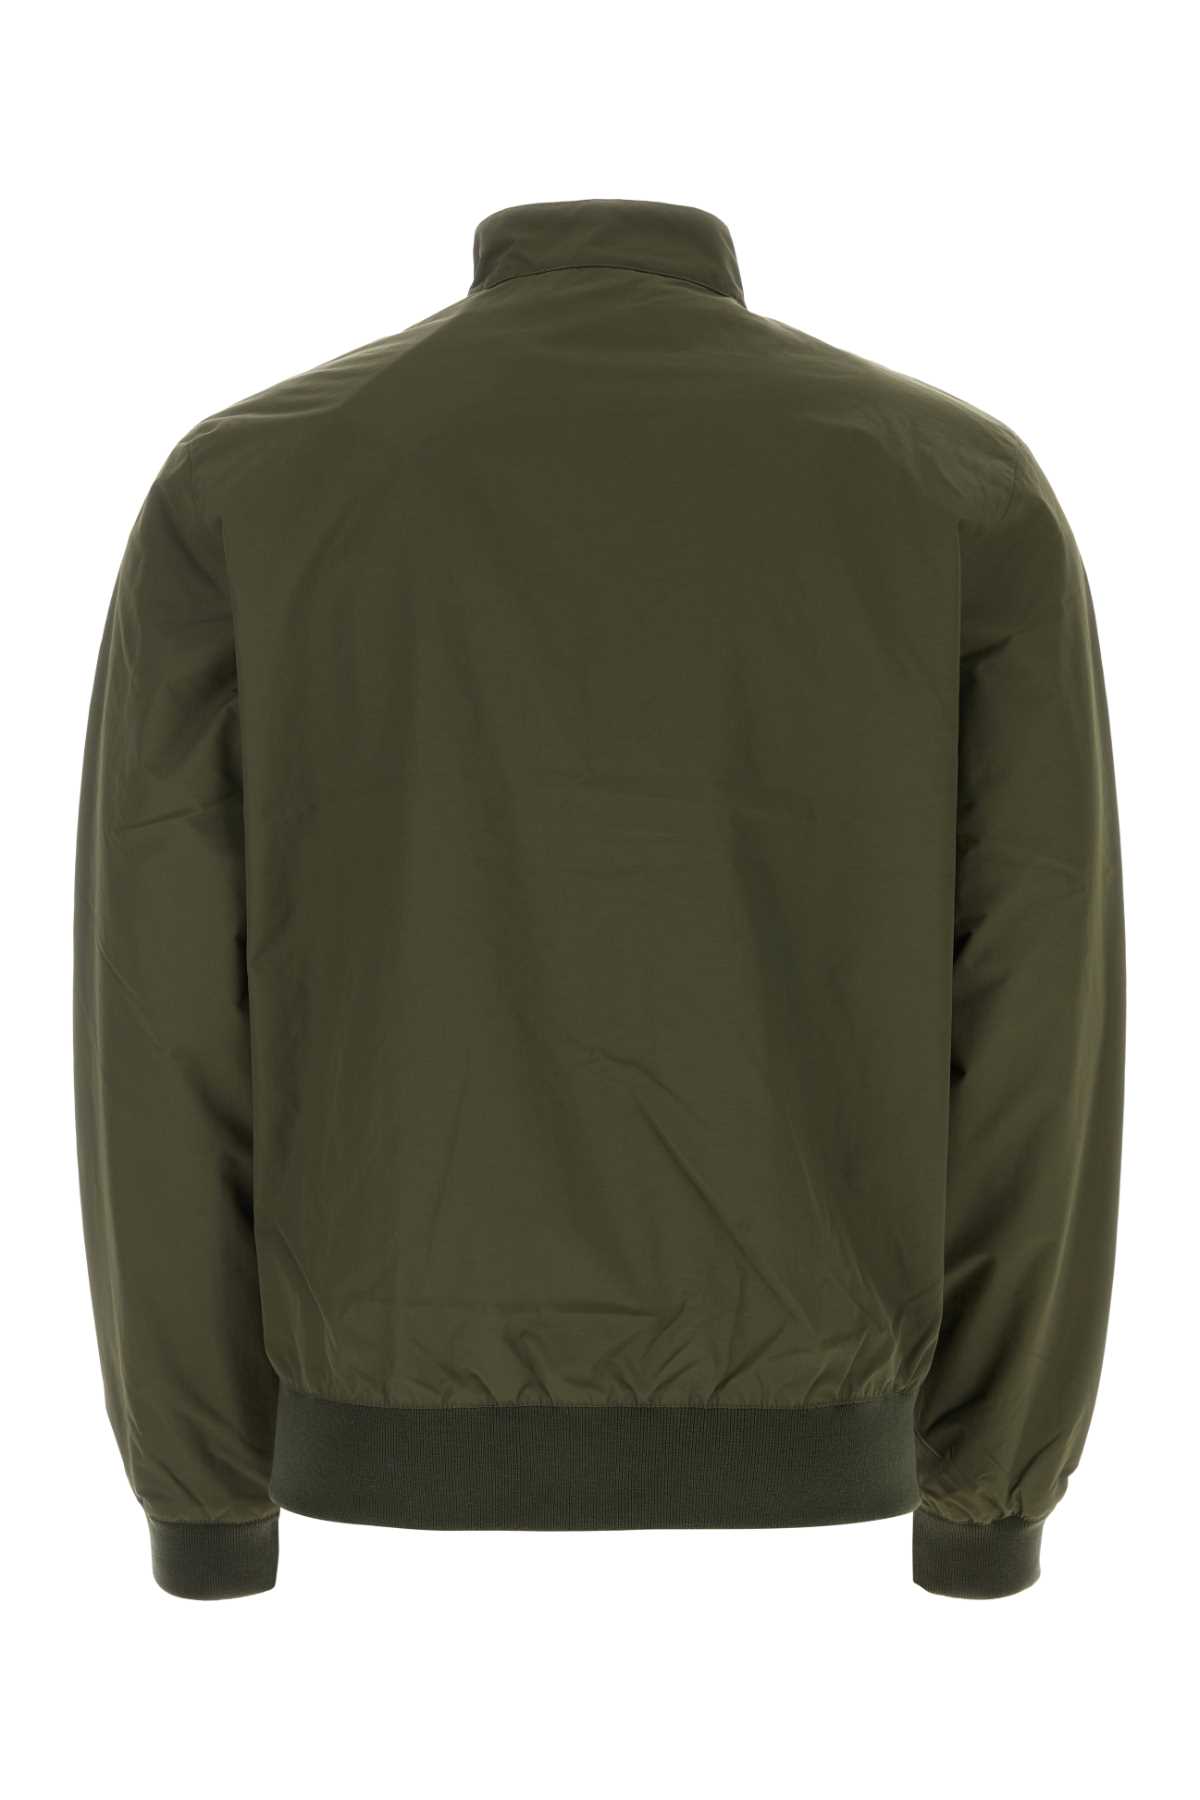 Shop Barbour Olive Green Nylon Royston Jacket